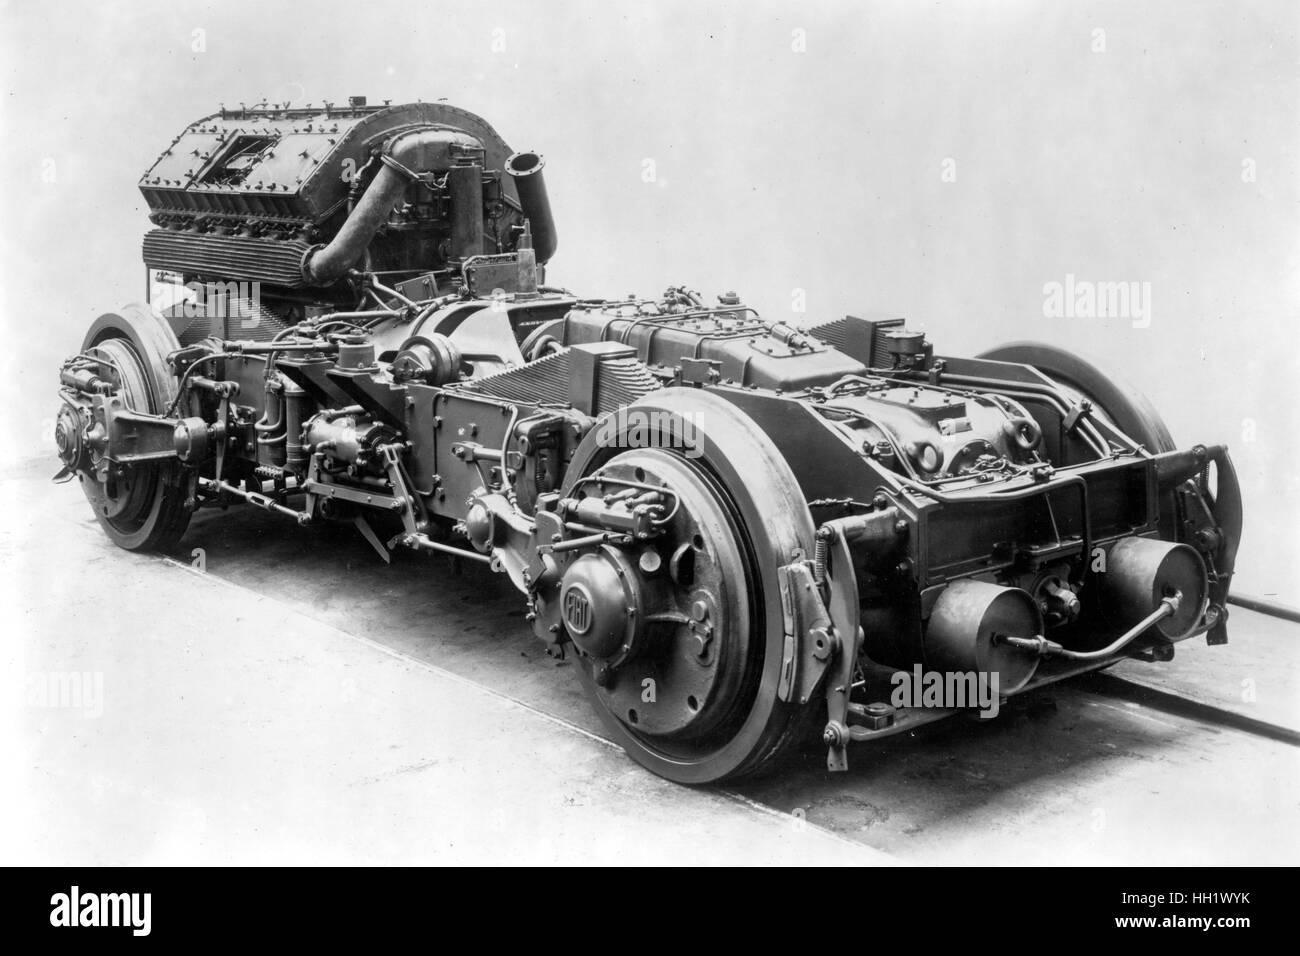 1930 - 40. Fiat - Ansaldo machine. Train components. Stock Photo